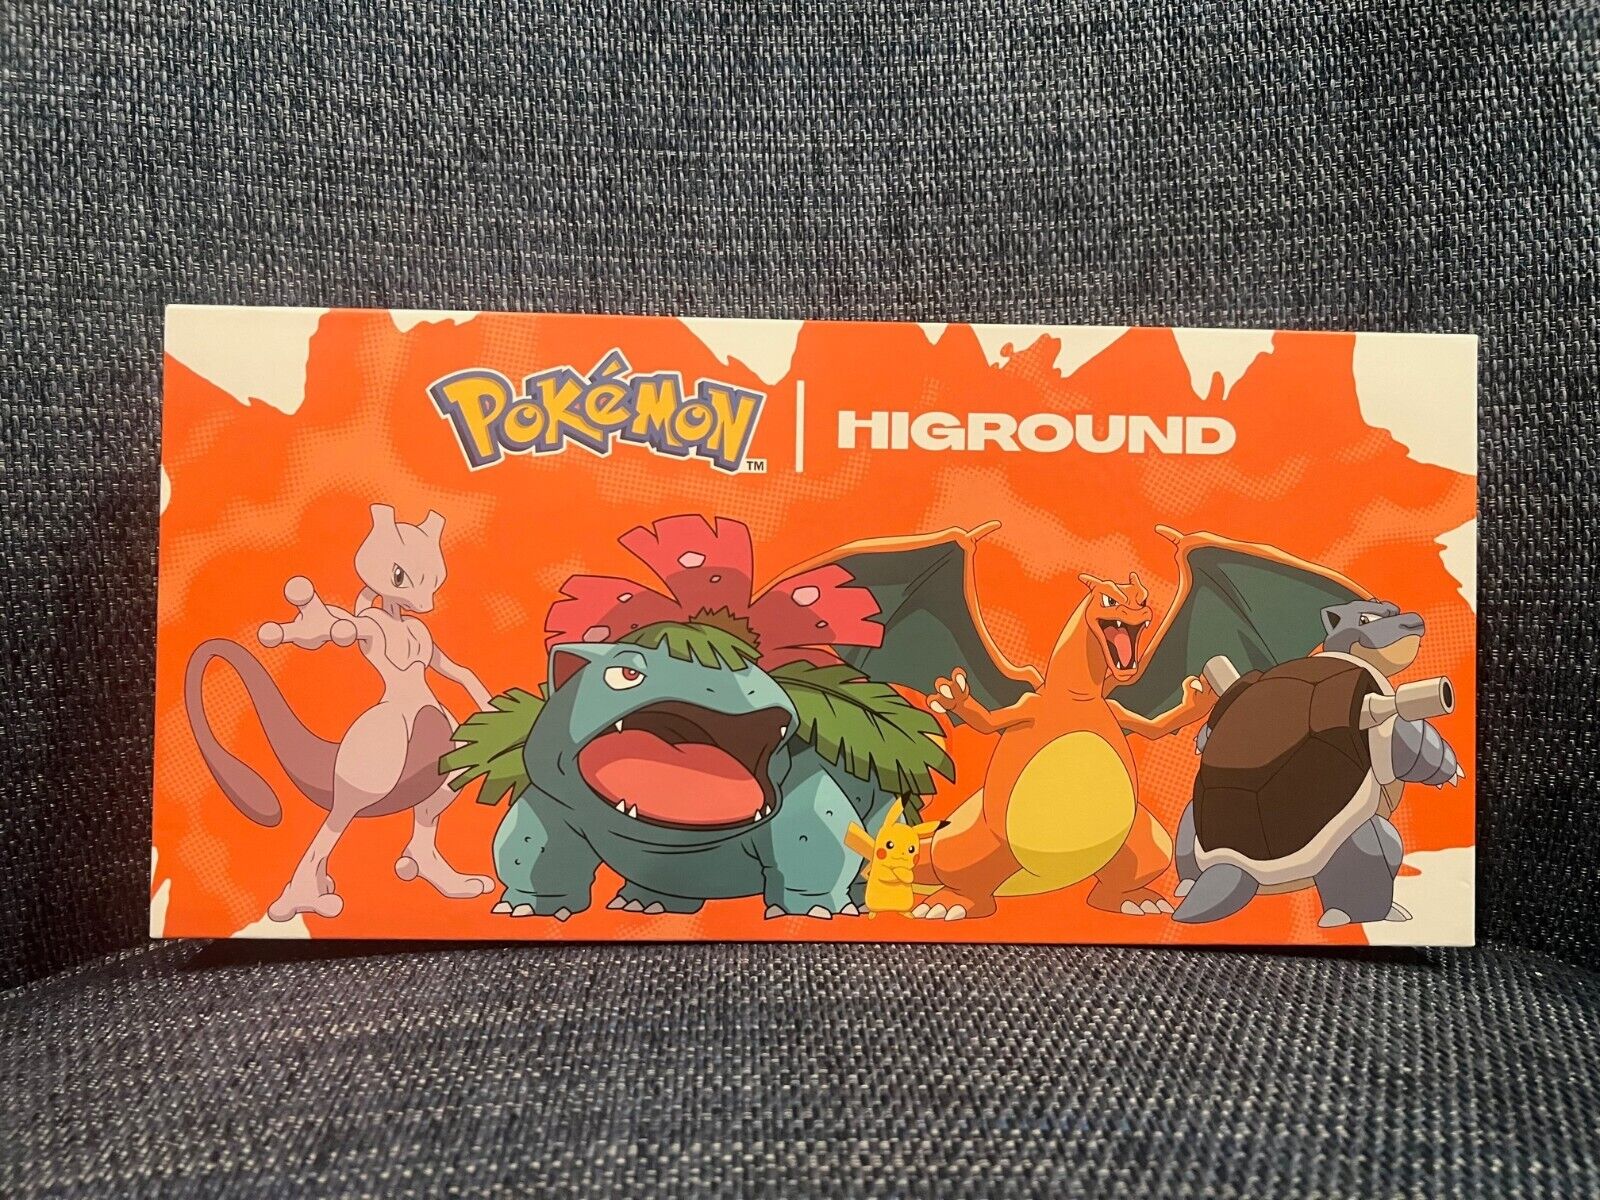 Pokémon + HG Summit 65 Keyboard 2.0 HiGround - Charizard - READY TO SHIP